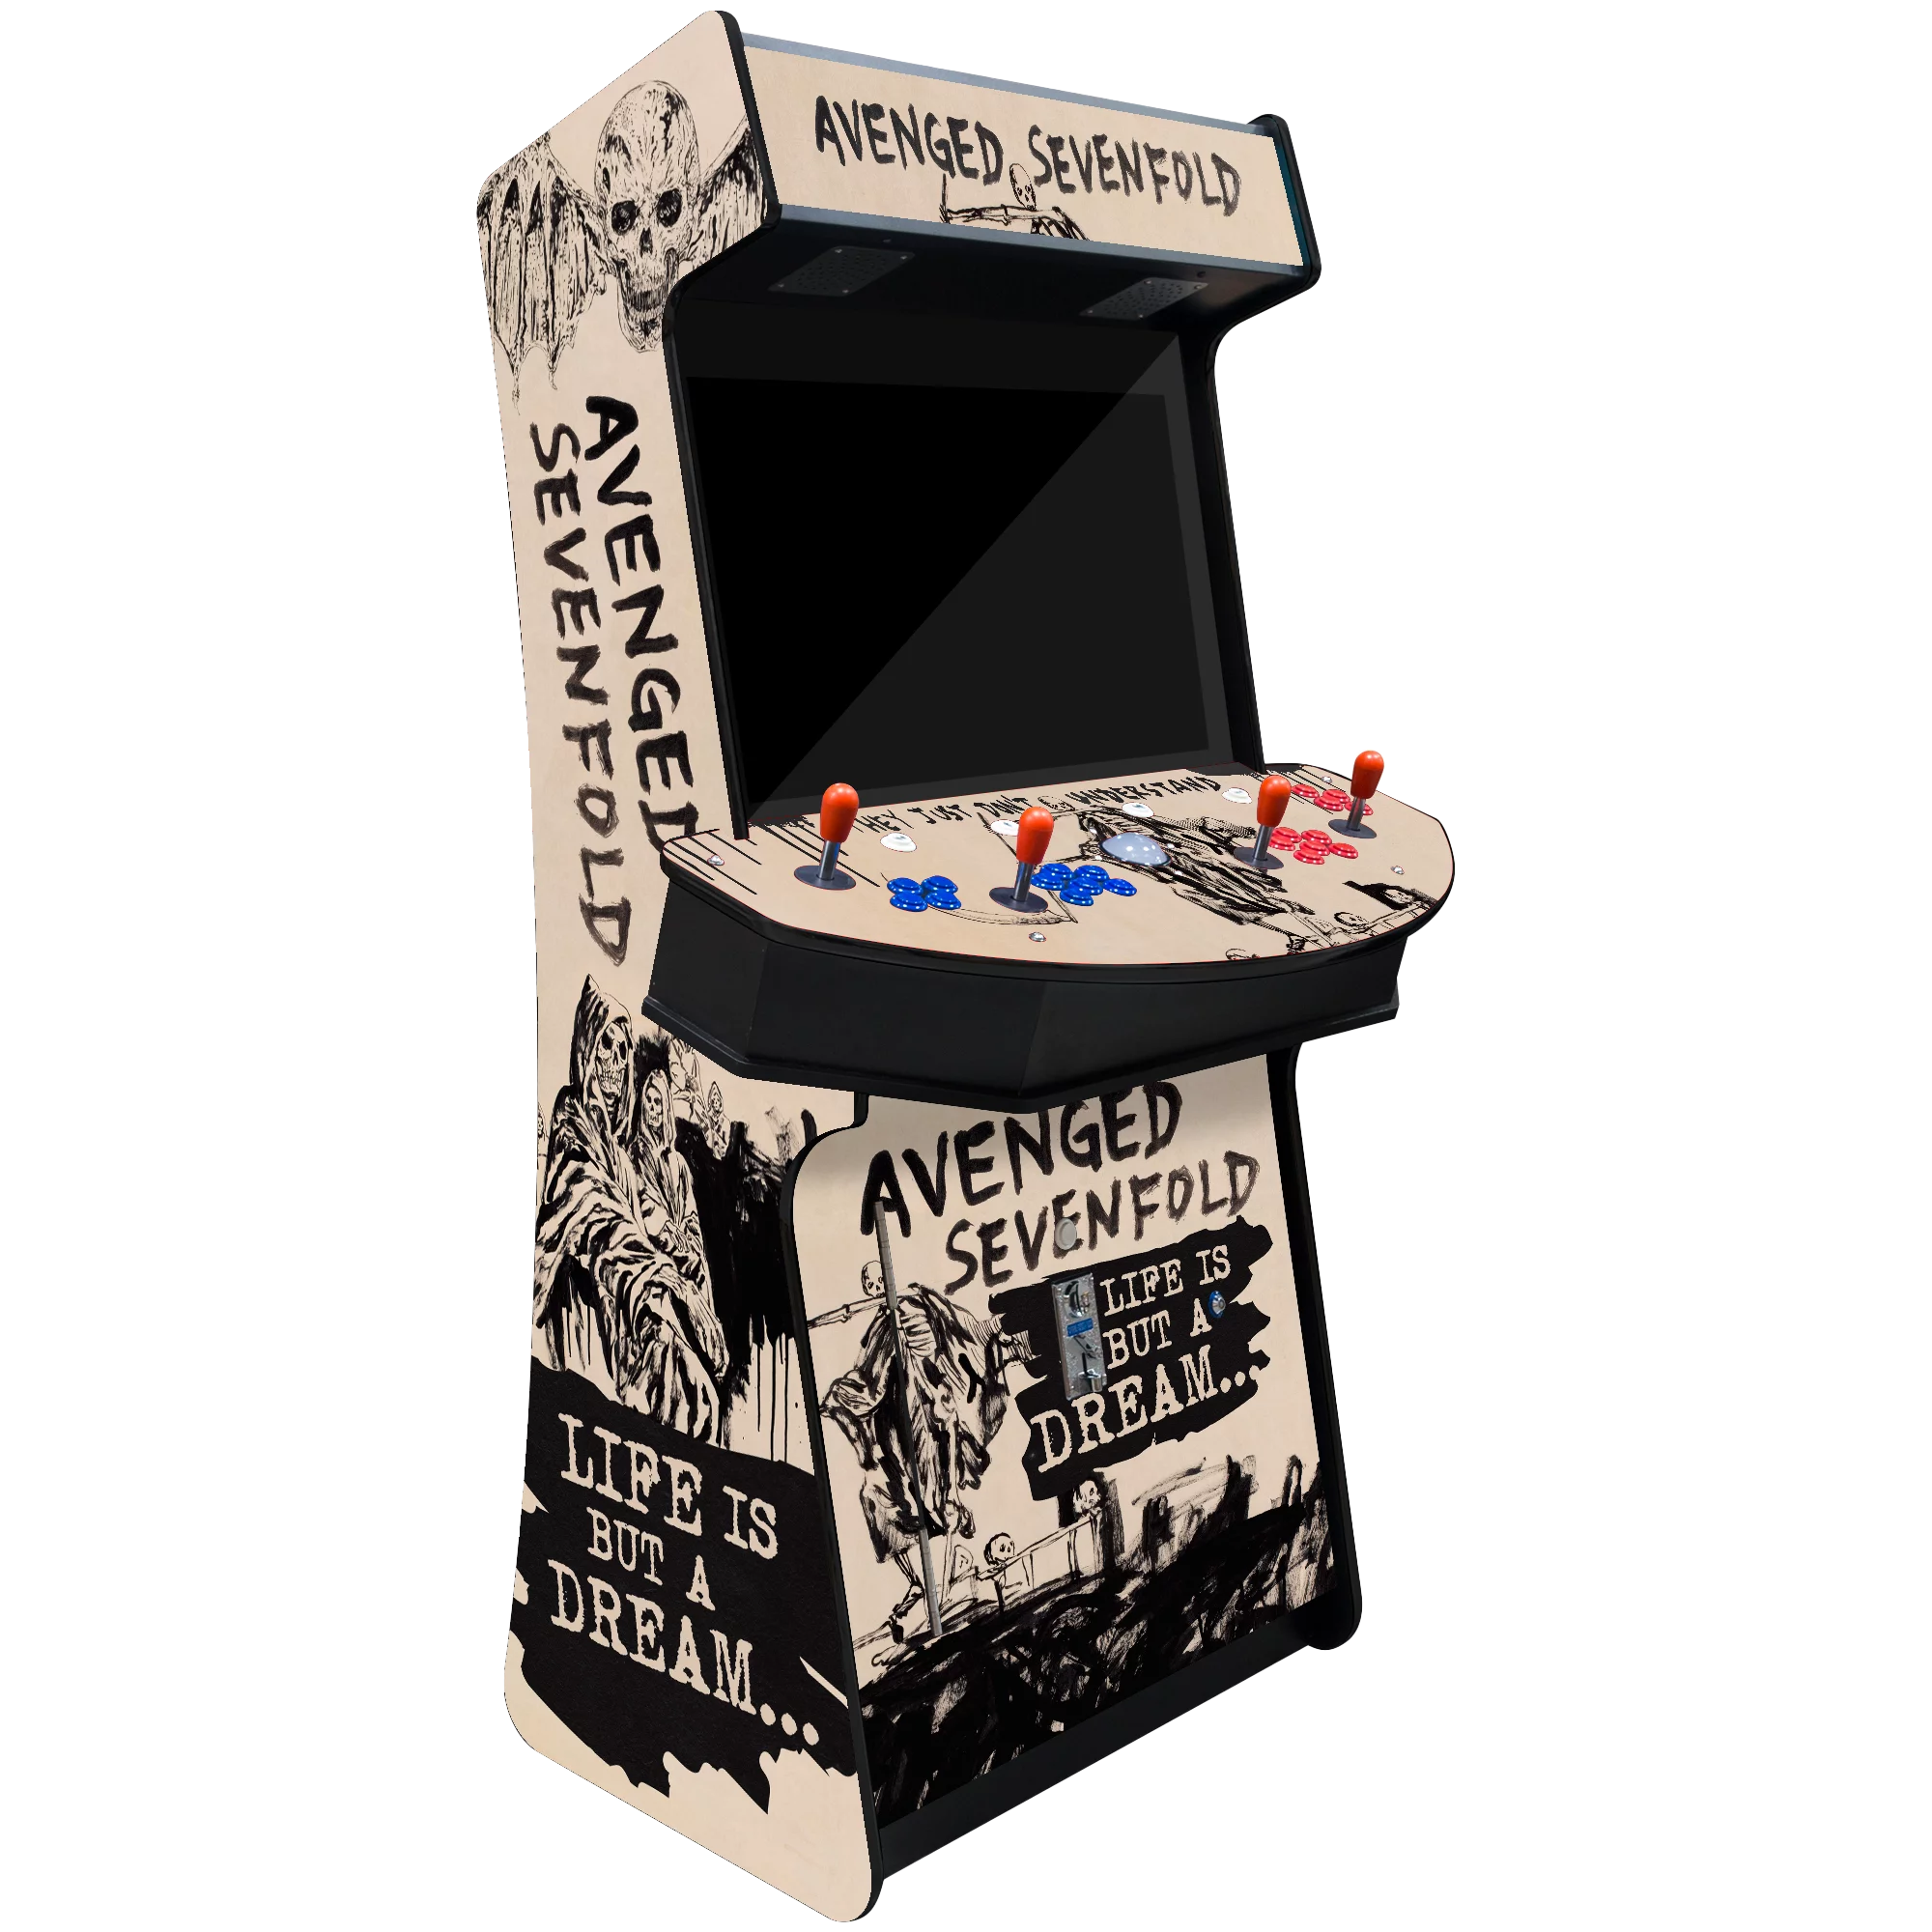 4P Slim Stand up Arcade Machine - Avenged Sevenfold Edition